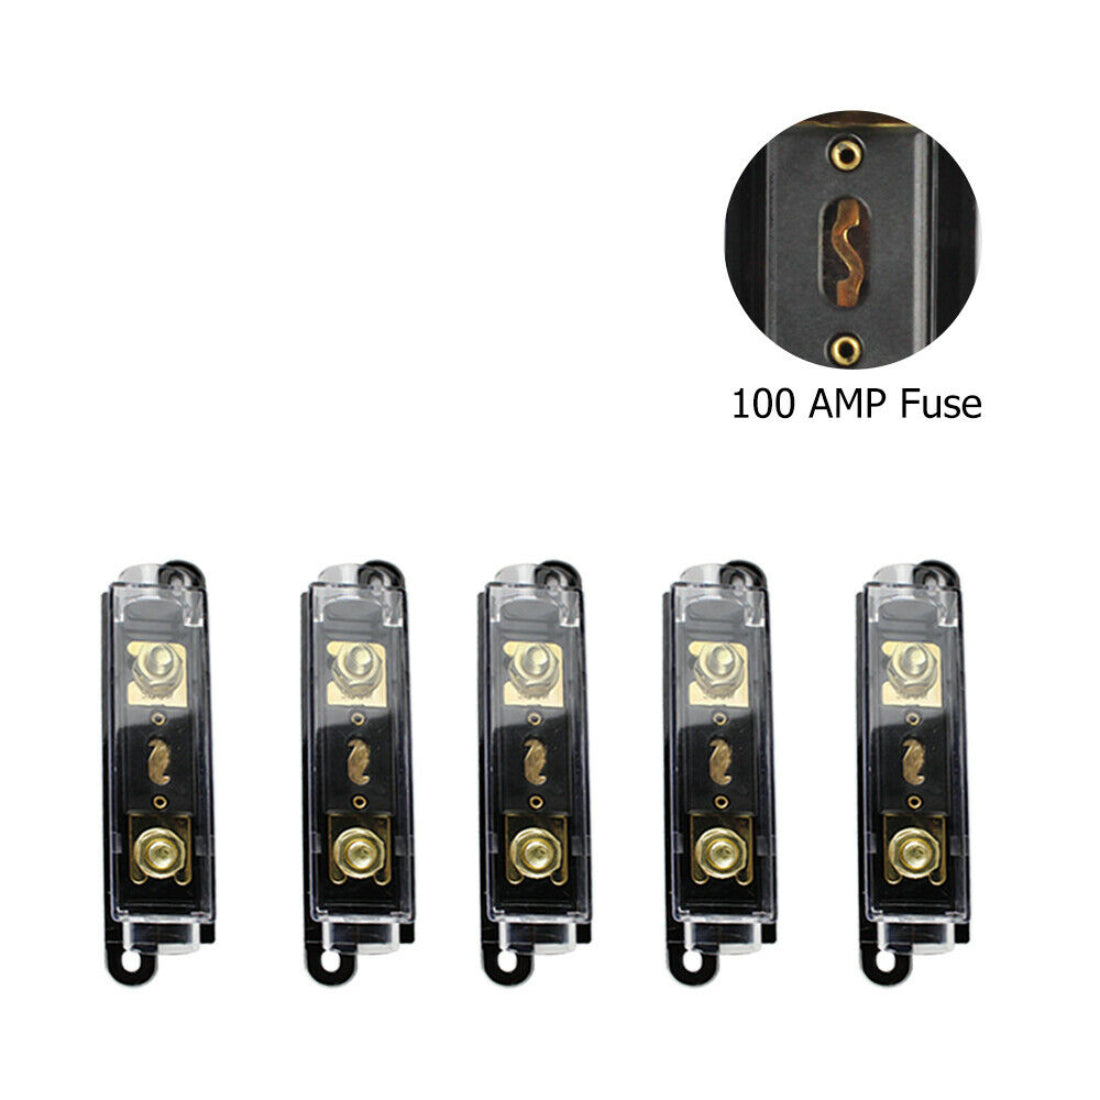 ANL Fuse Holder 100A Amp Inline Block 0/4/8 AWG Gauge Car Audio Install